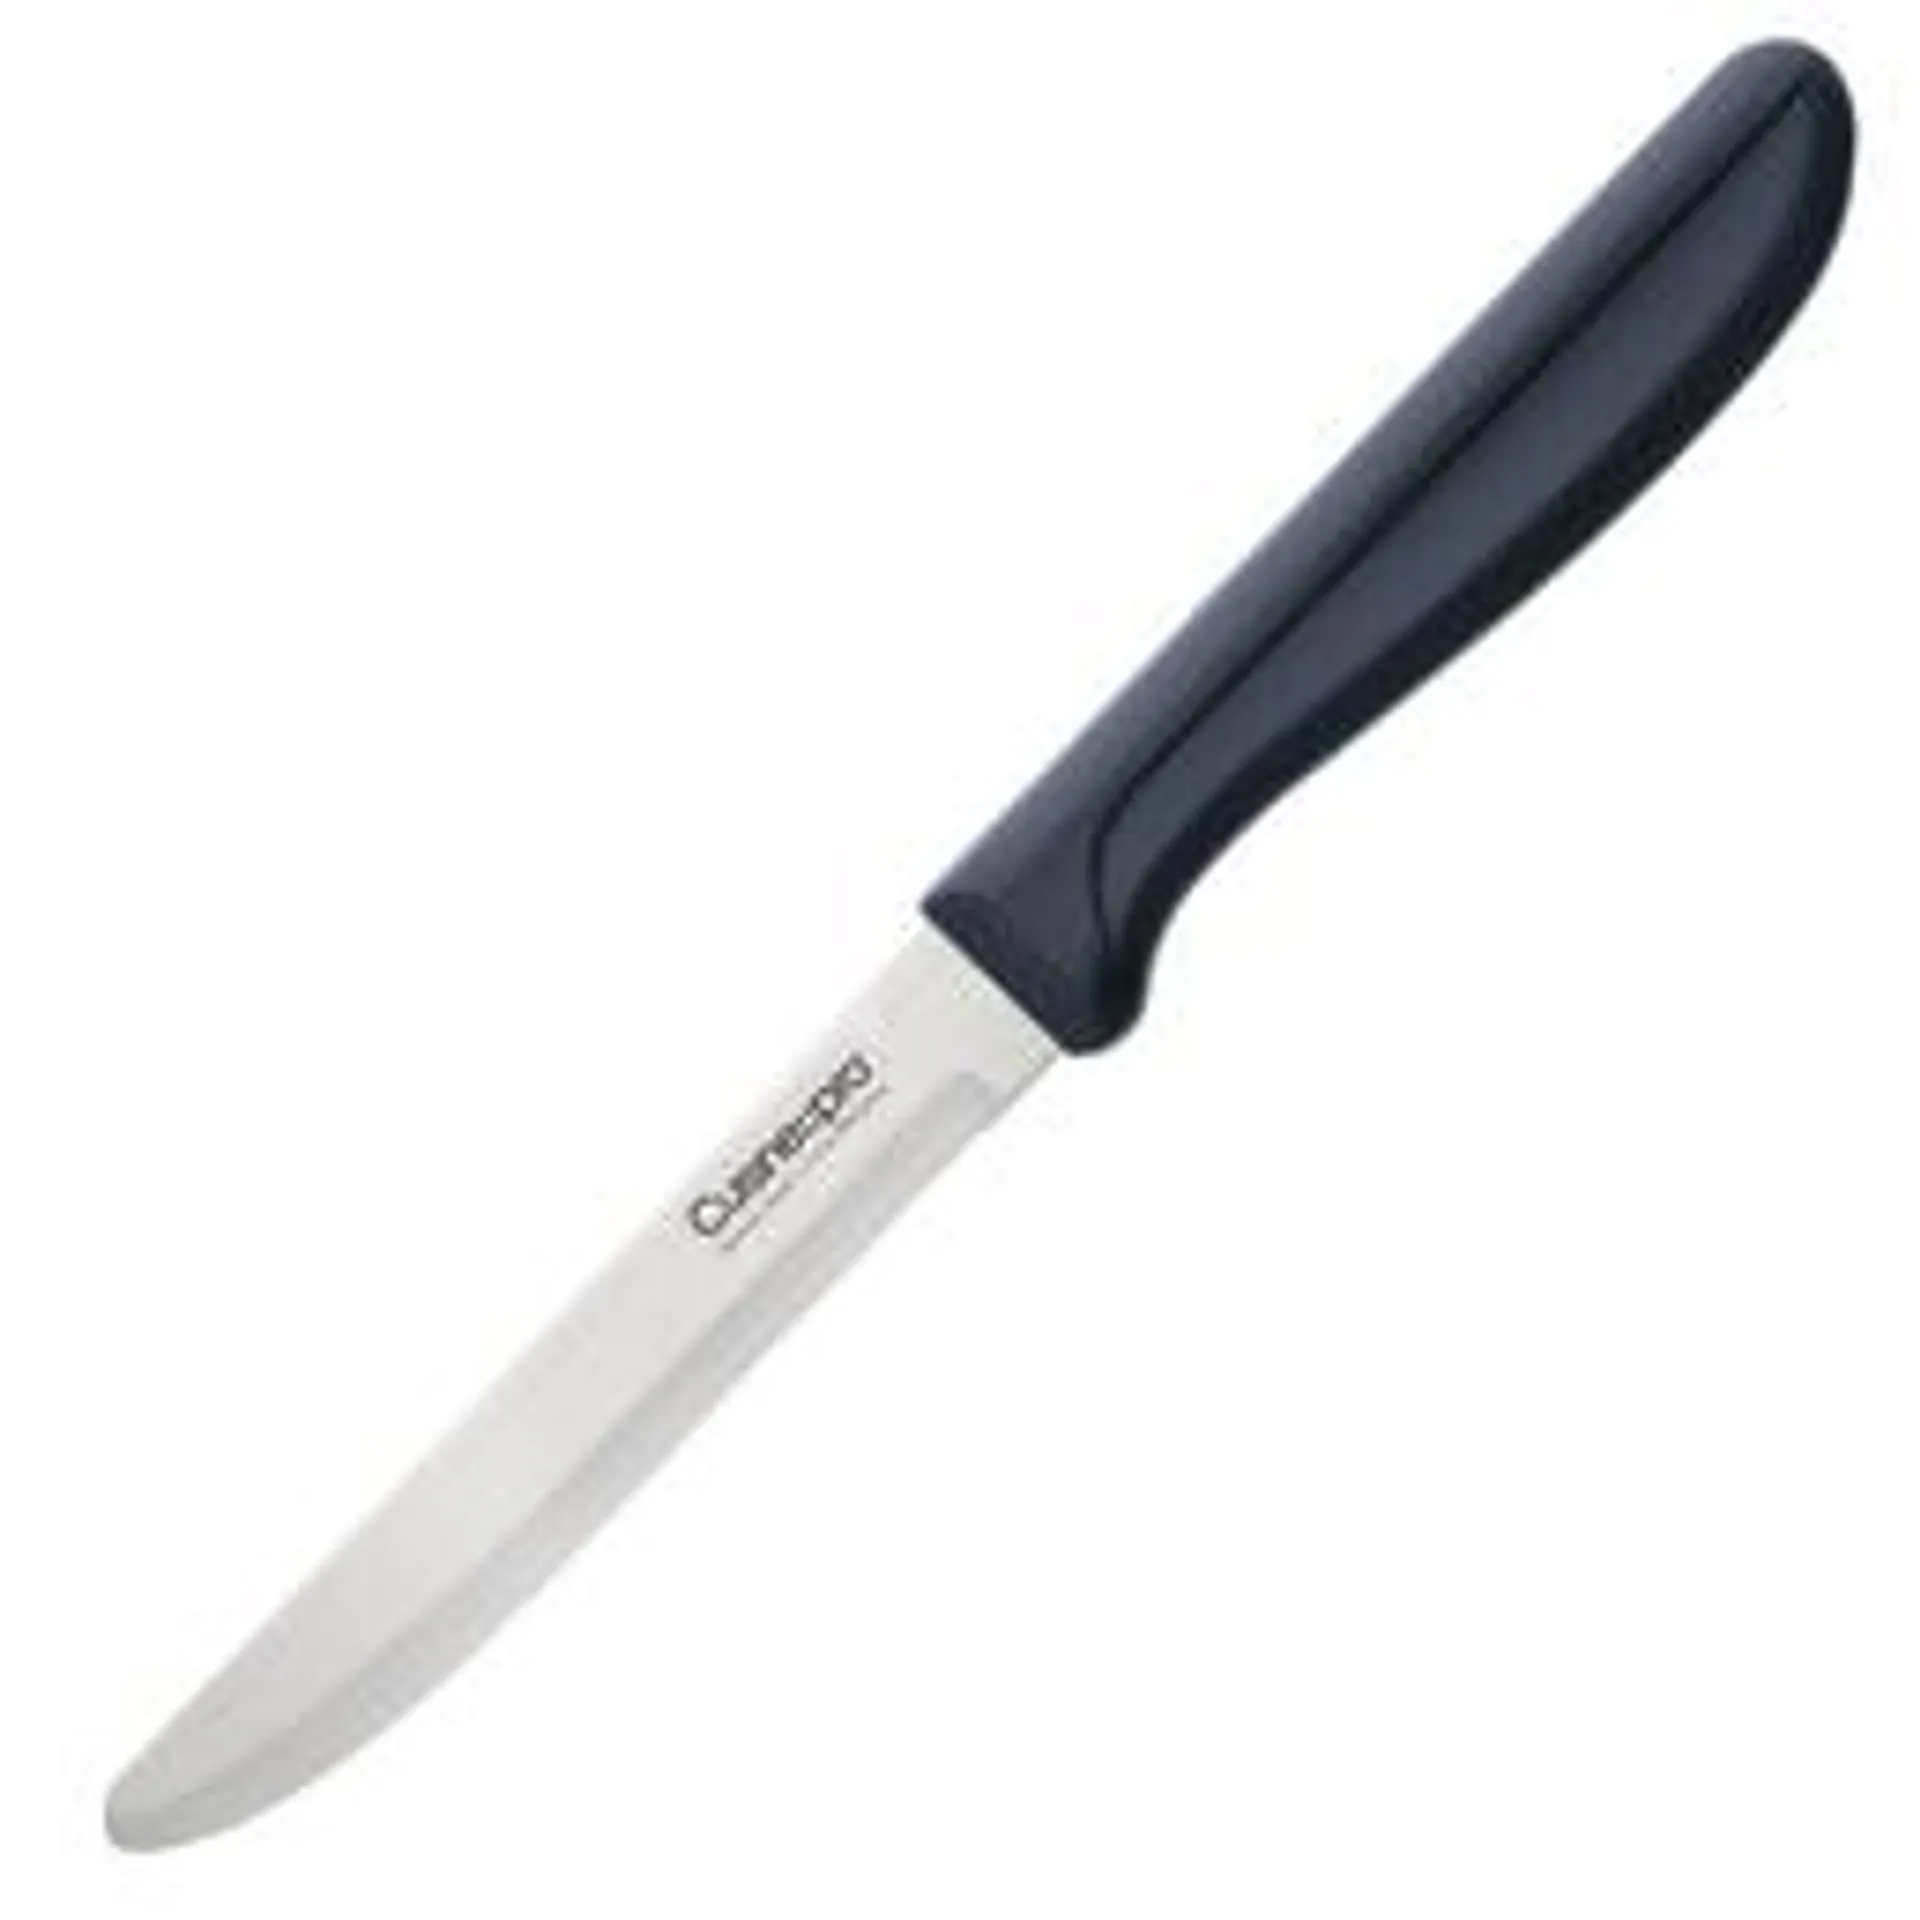 Cuisine::pro Classic Serrated Utility Knife, Grey, 13cm